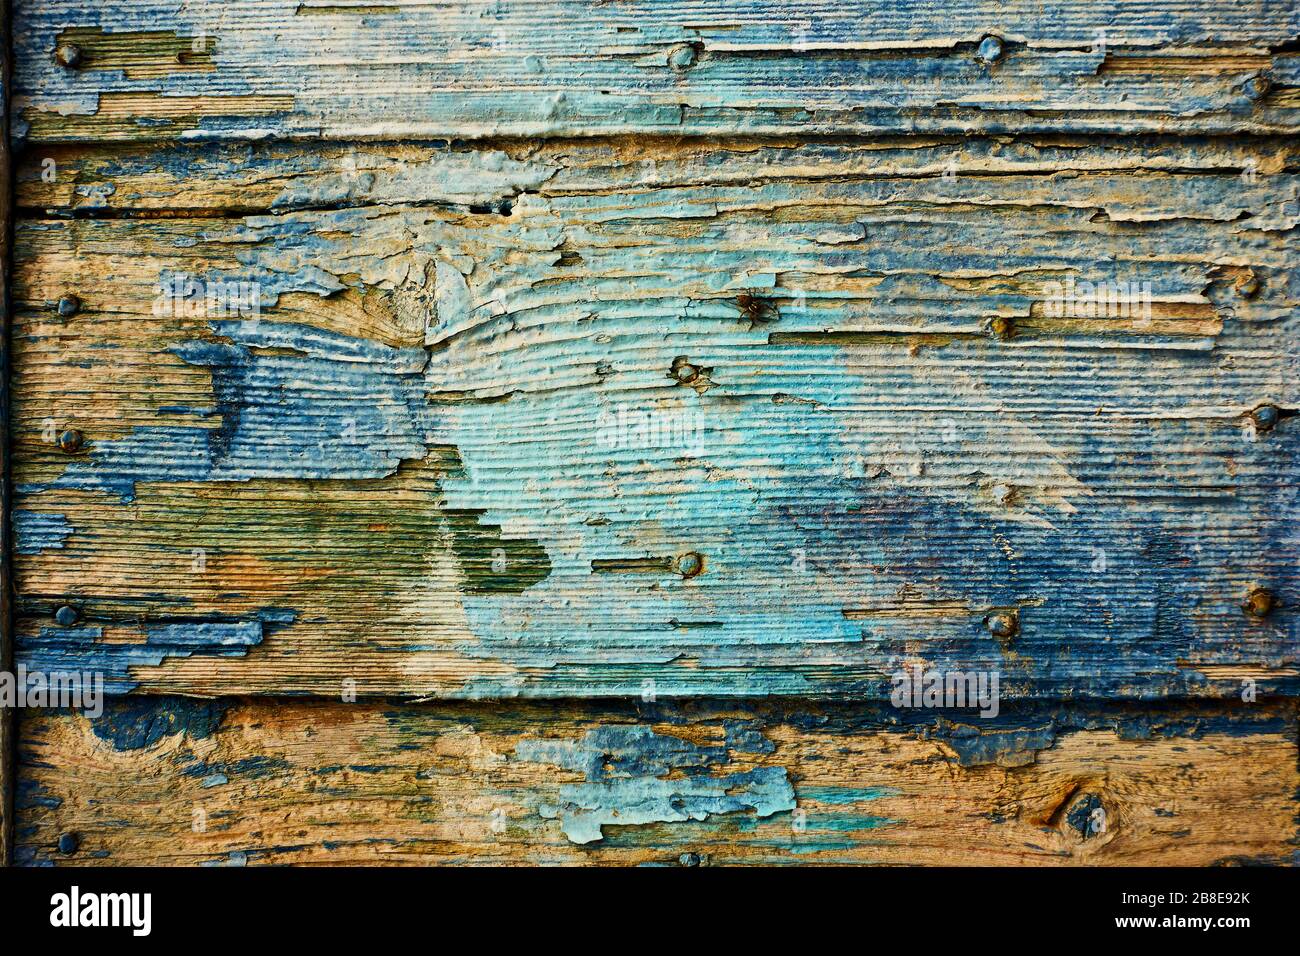 Caribbean painting on rustic wood plank